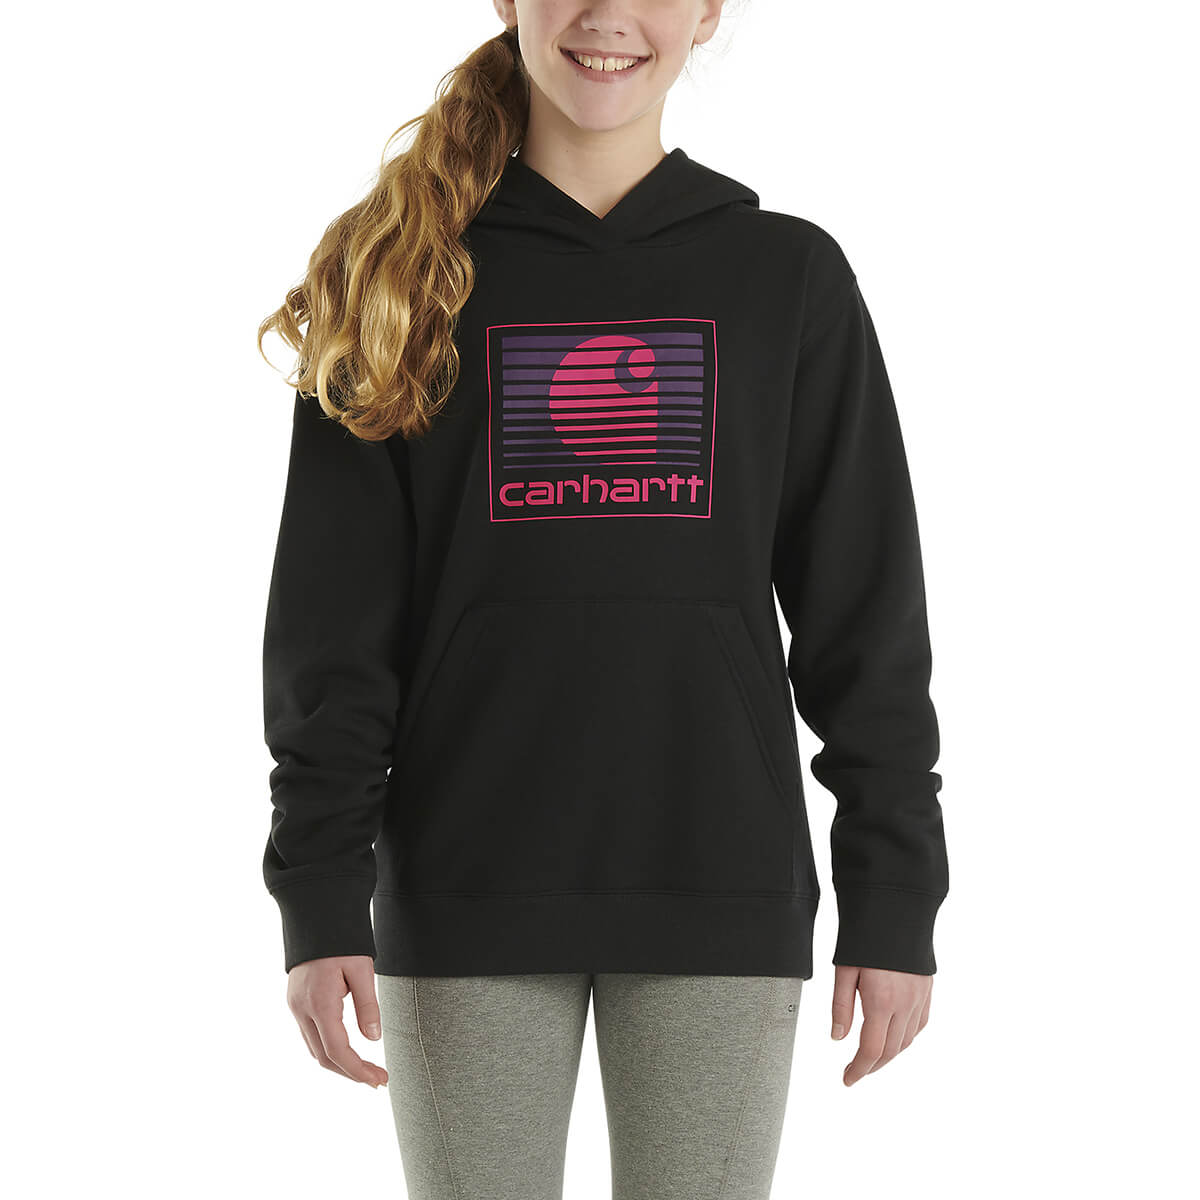 Carhartt Girl's Long Sleeve Graphic Sweatshirt CA9985 - Black